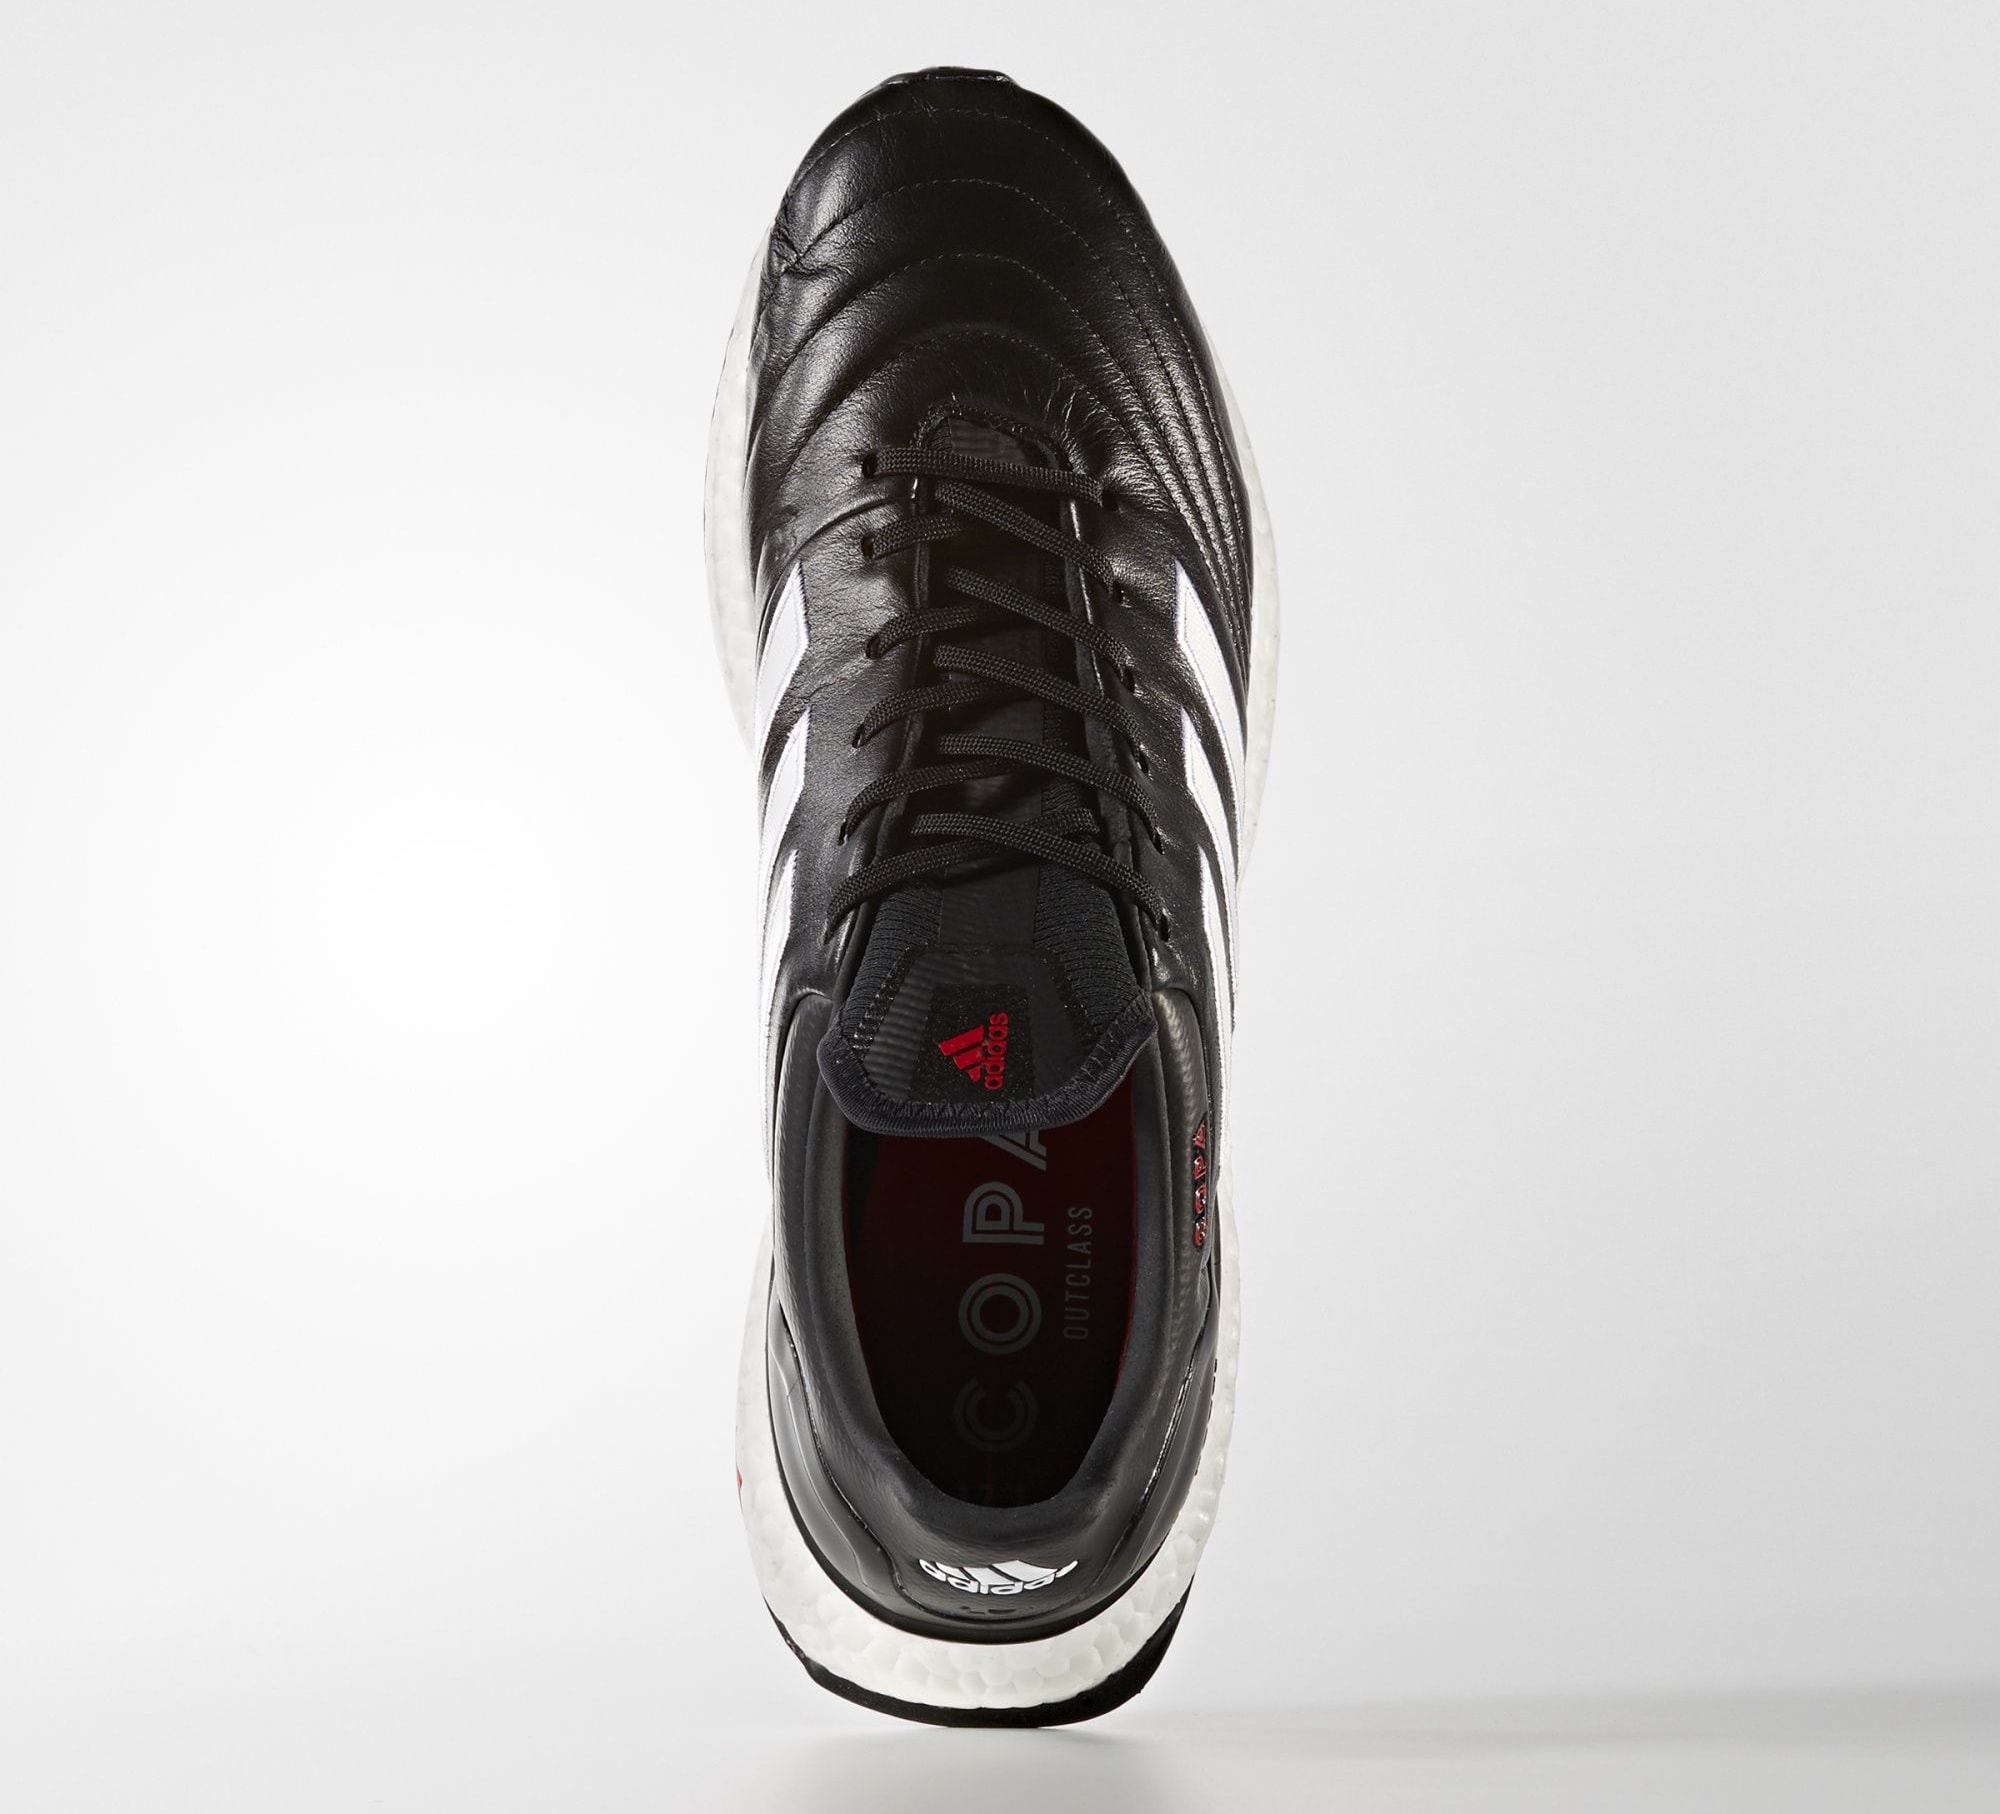 Adidas Copa 17.1 Ultra Boost